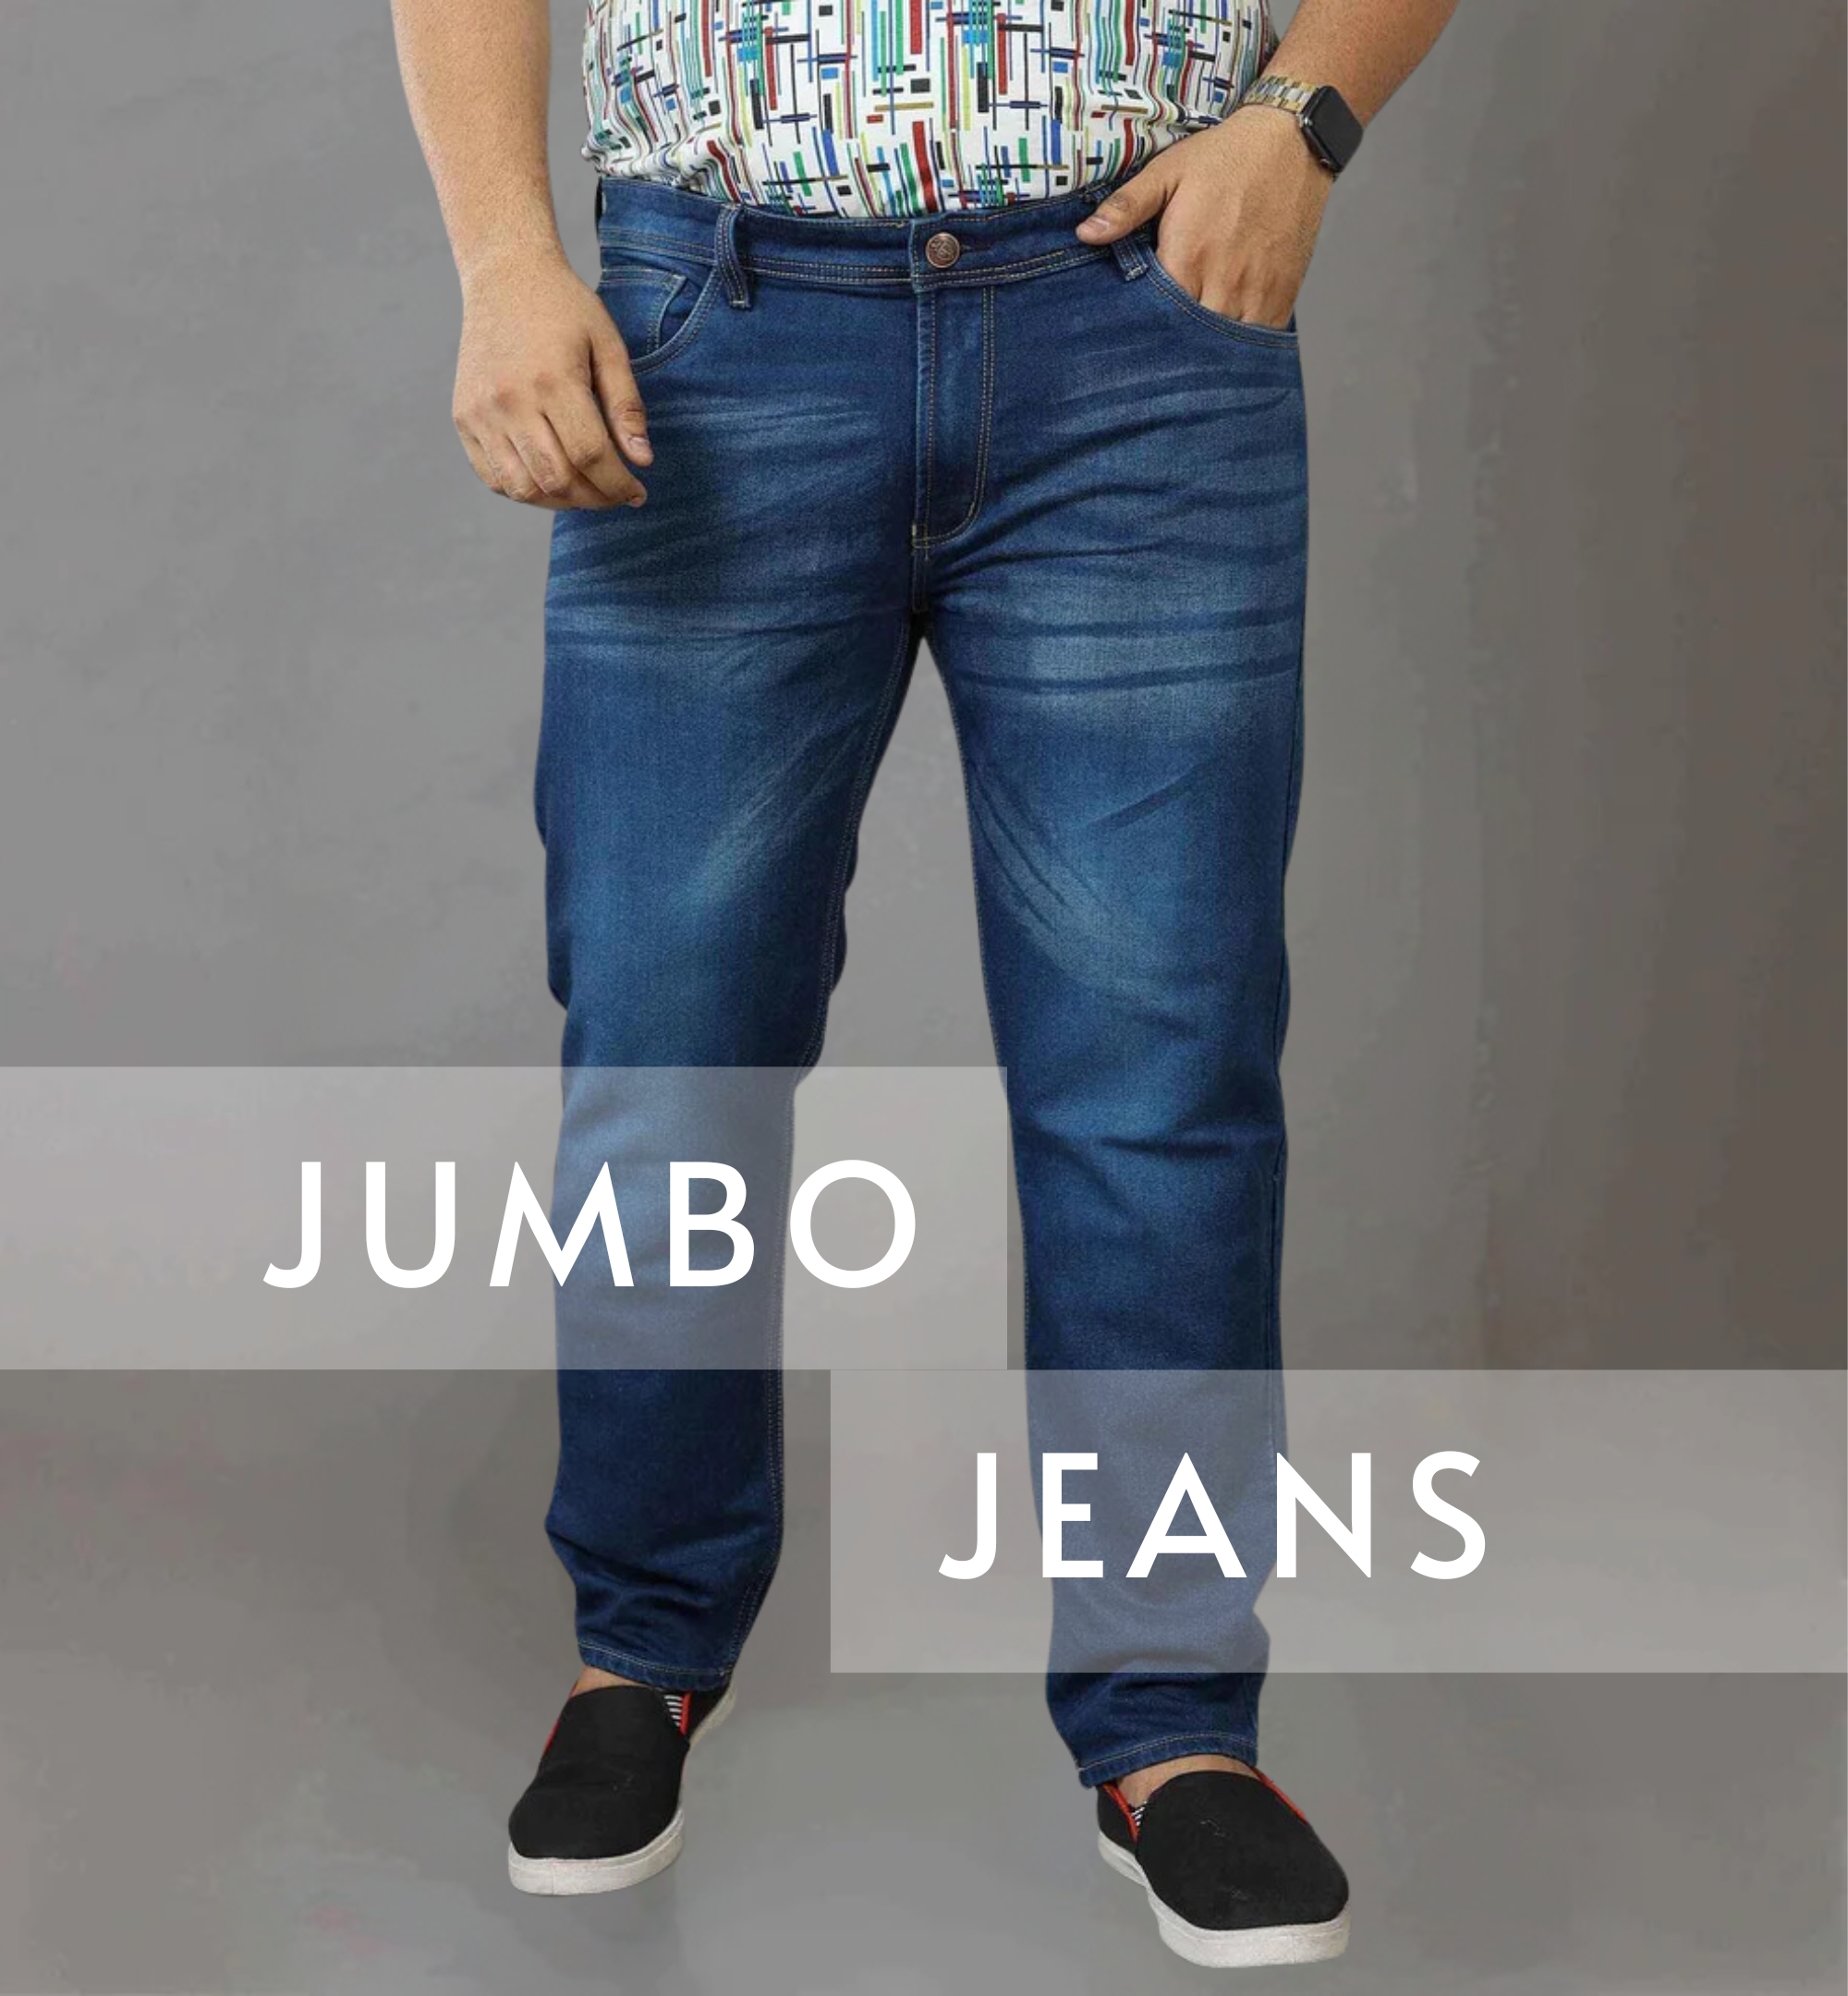 Jumbo Jeans